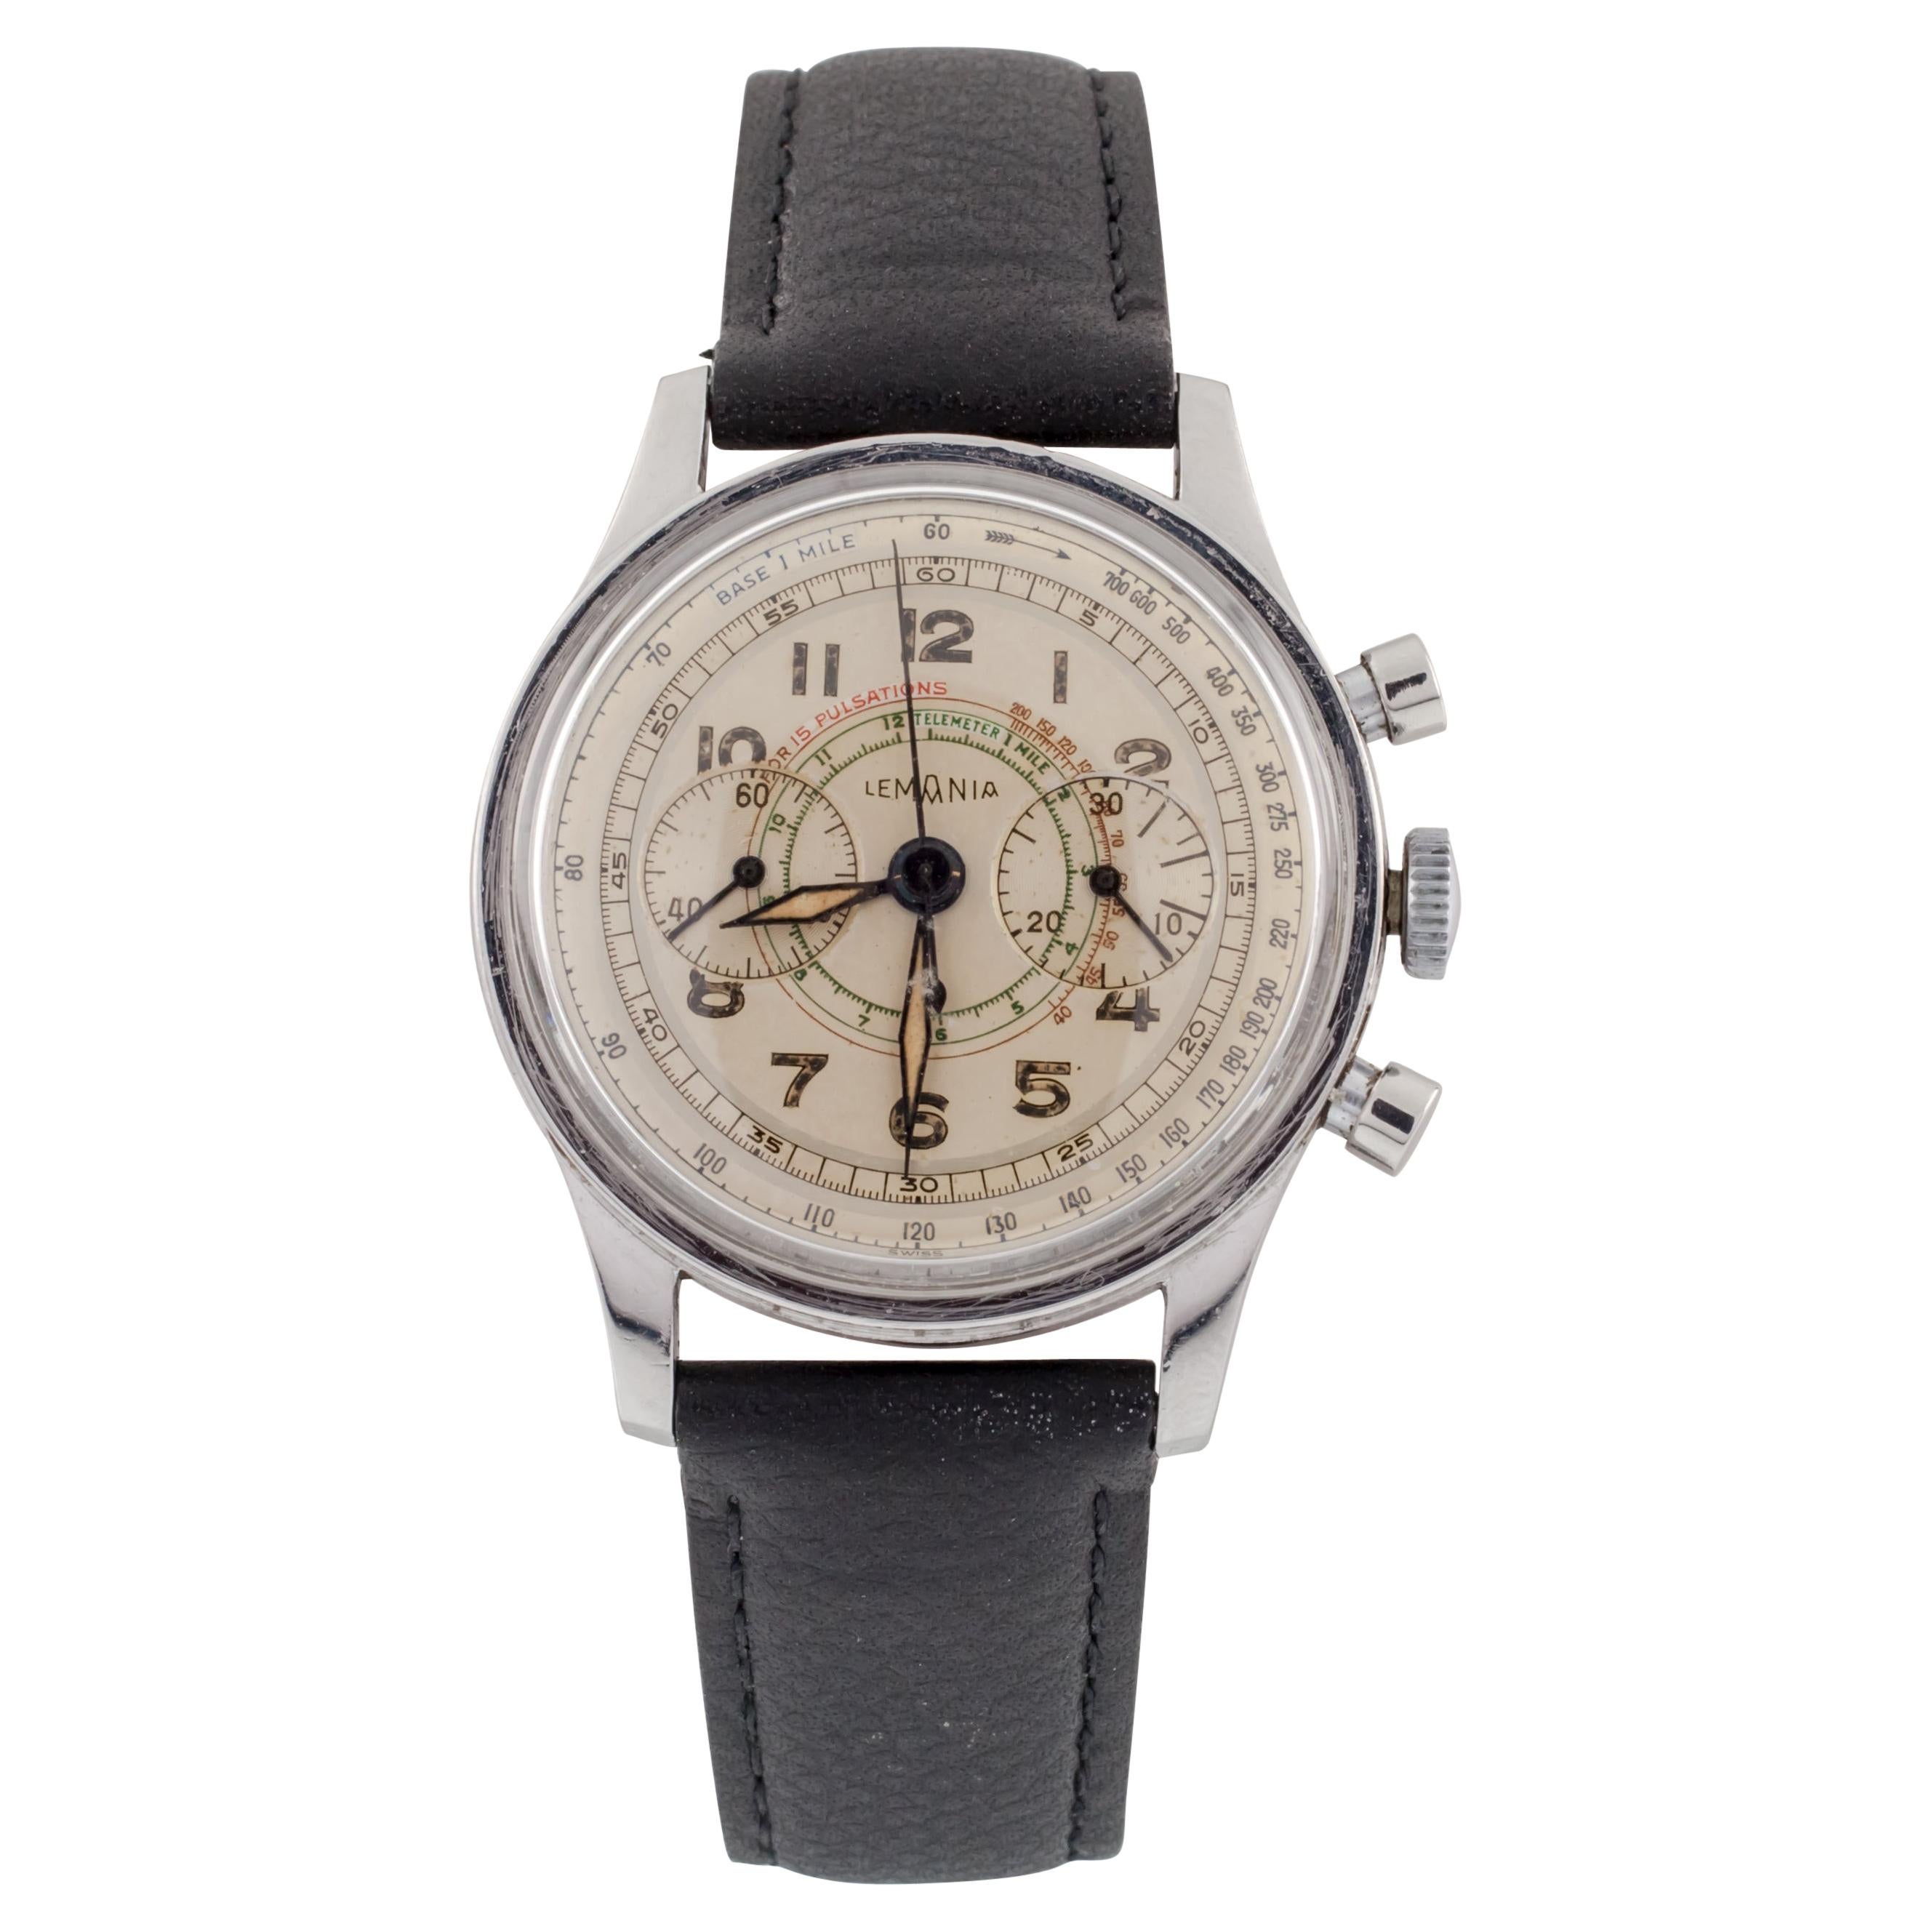 Lemania Edelstahl 15TL Chronograph Uhr Tachymeter 1940er Jahre Lederband